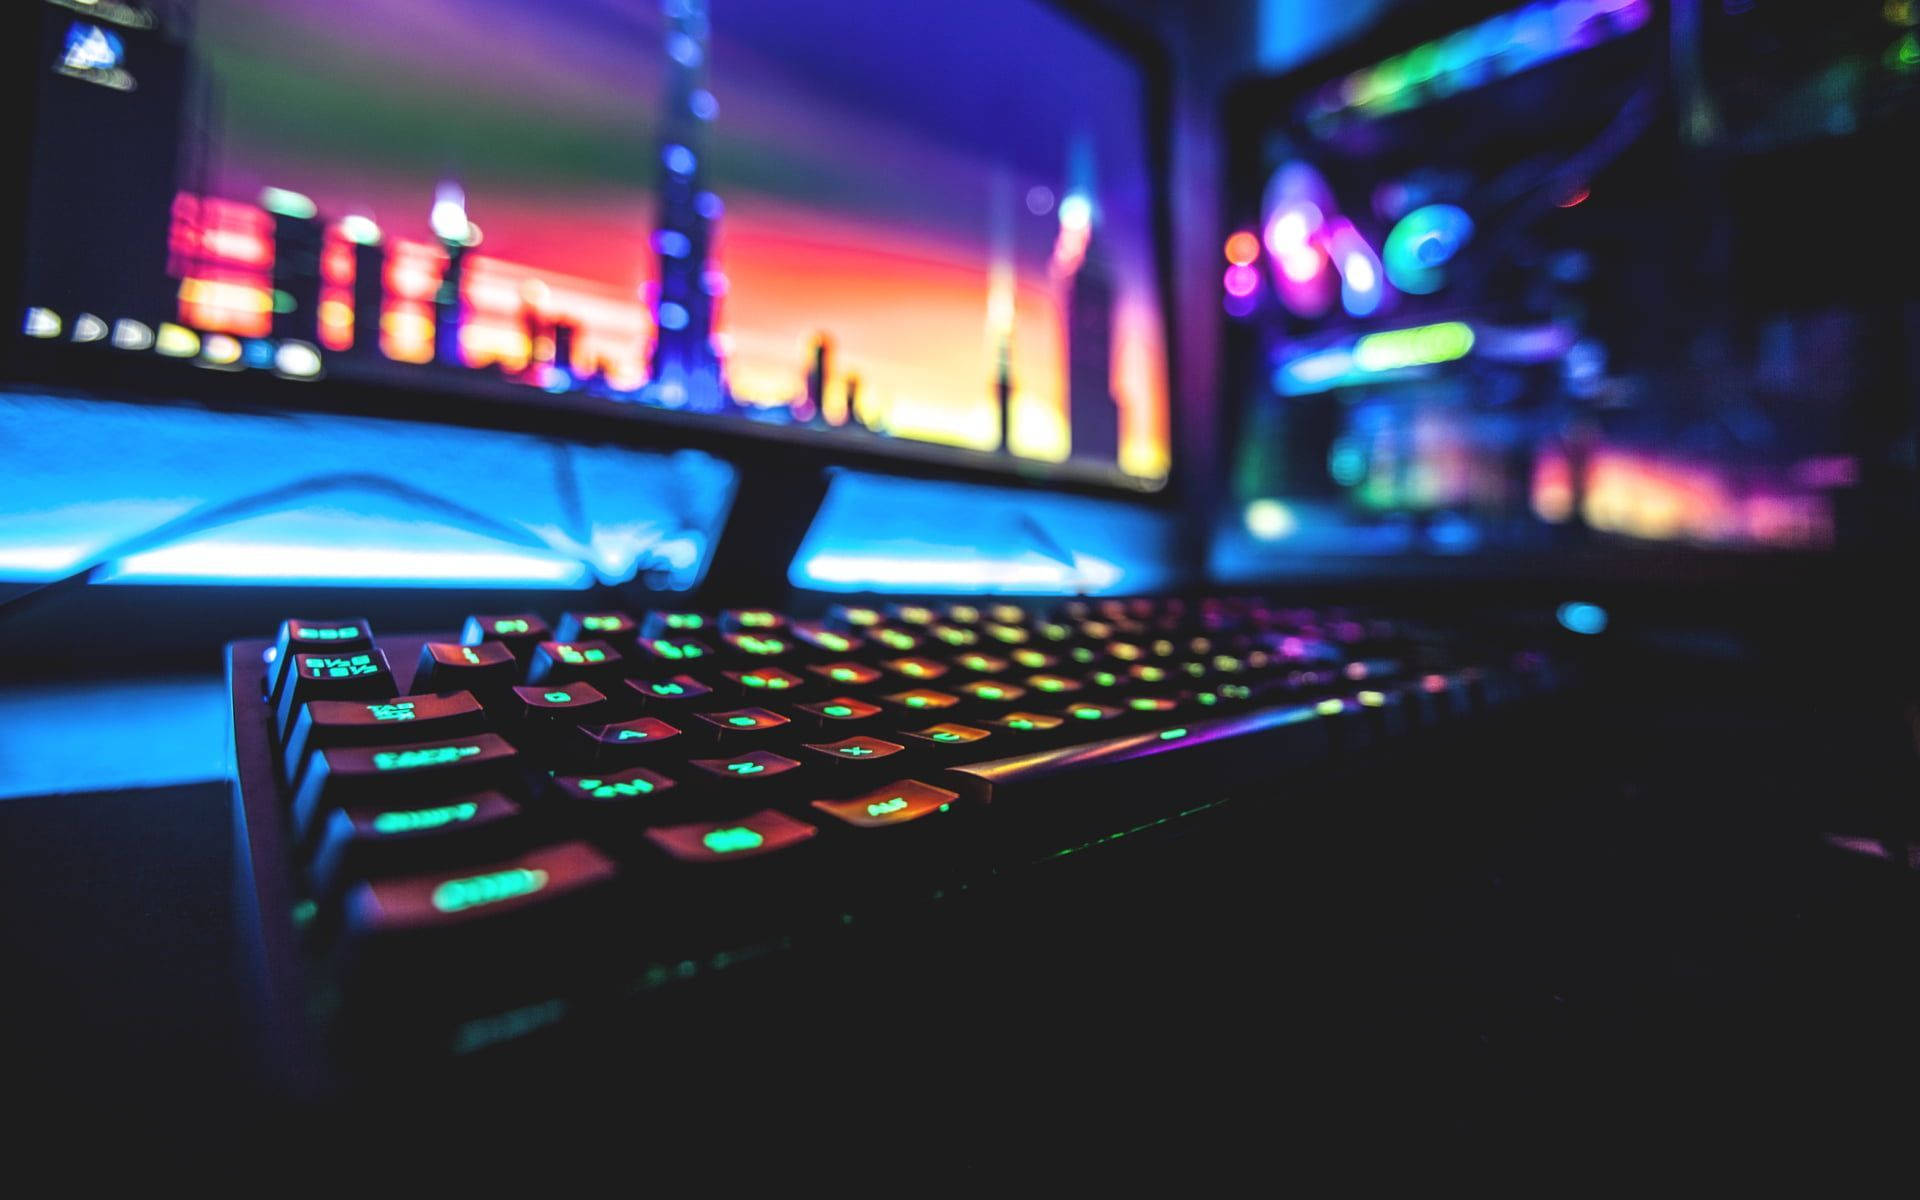 Aesthetic Neon Light Computer Keyboard Background